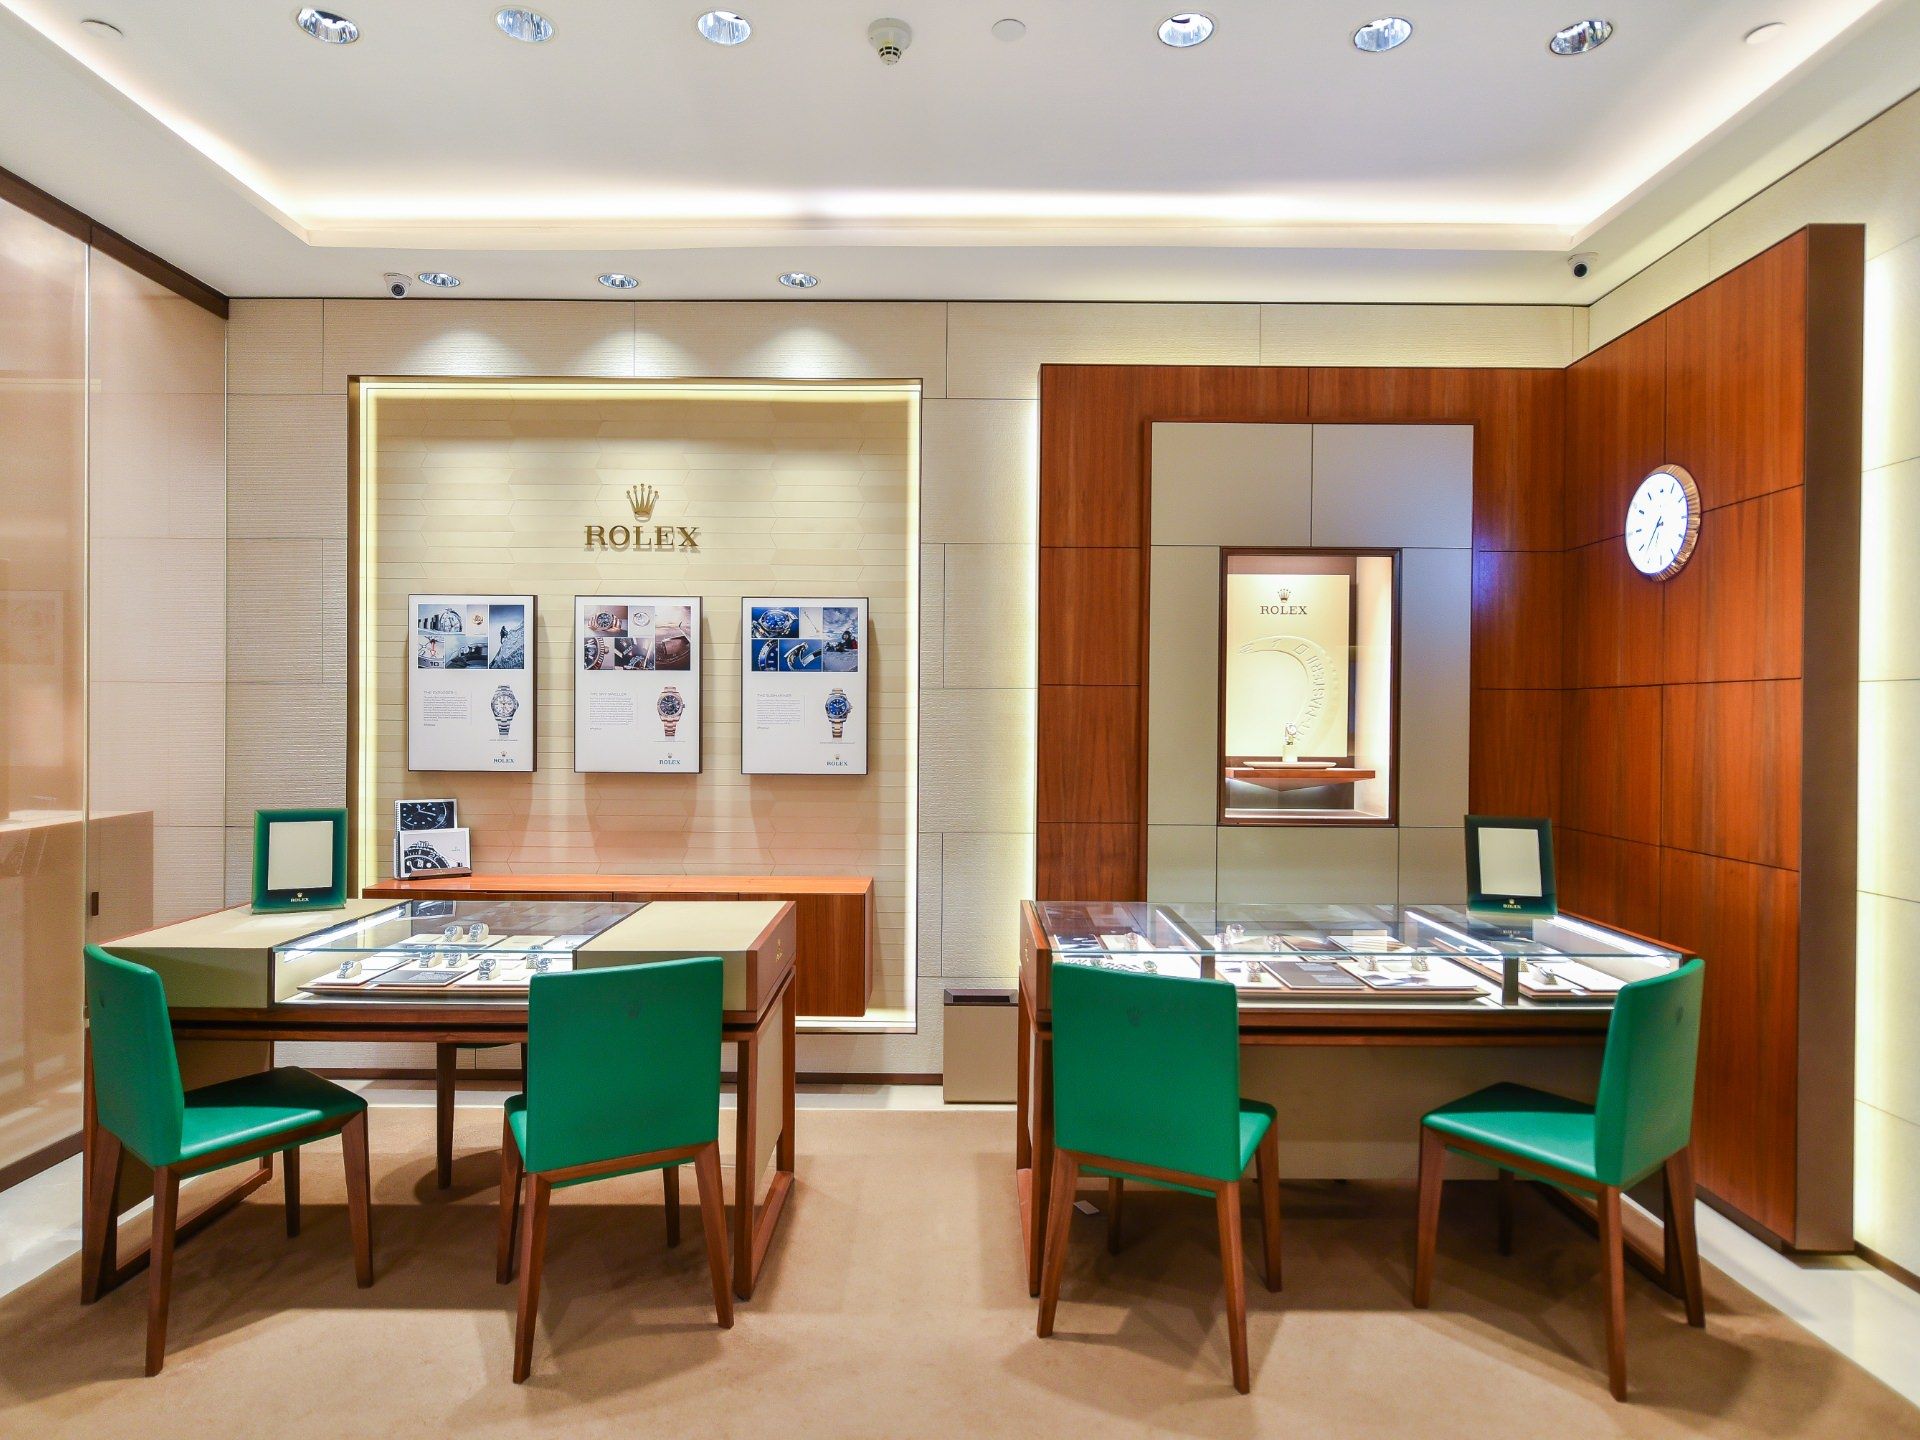 Rolex Boutique - Ethos Limited, New Delhi, Delhi